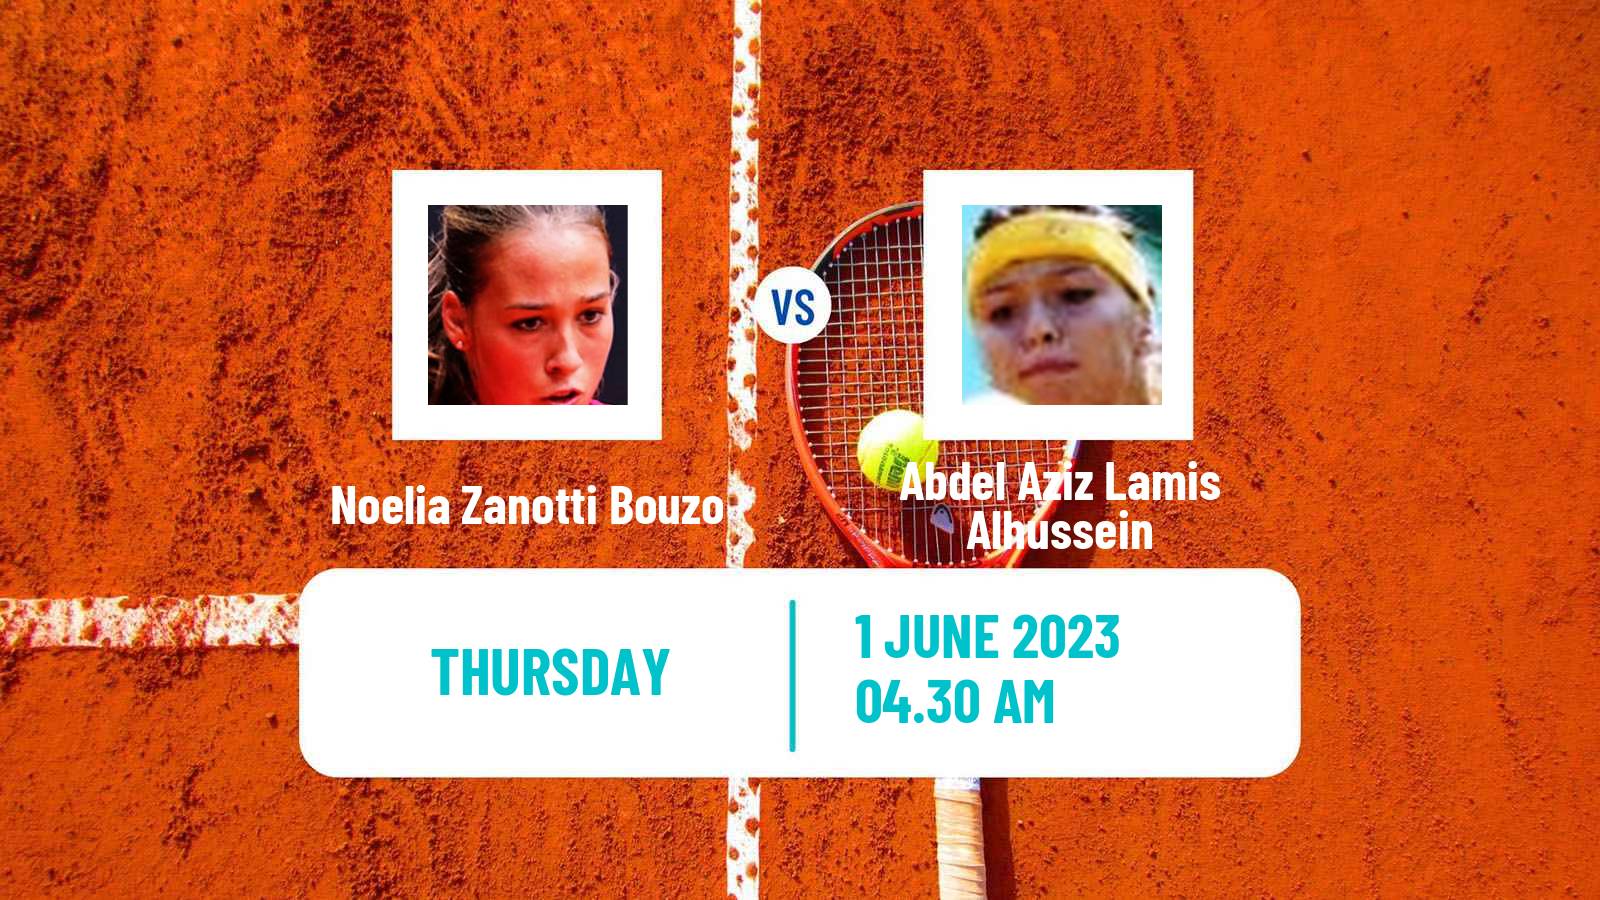 Tennis ITF W15 Monastir 17 Women Noelia Zanotti Bouzo - Abdel Aziz Lamis Alhussein